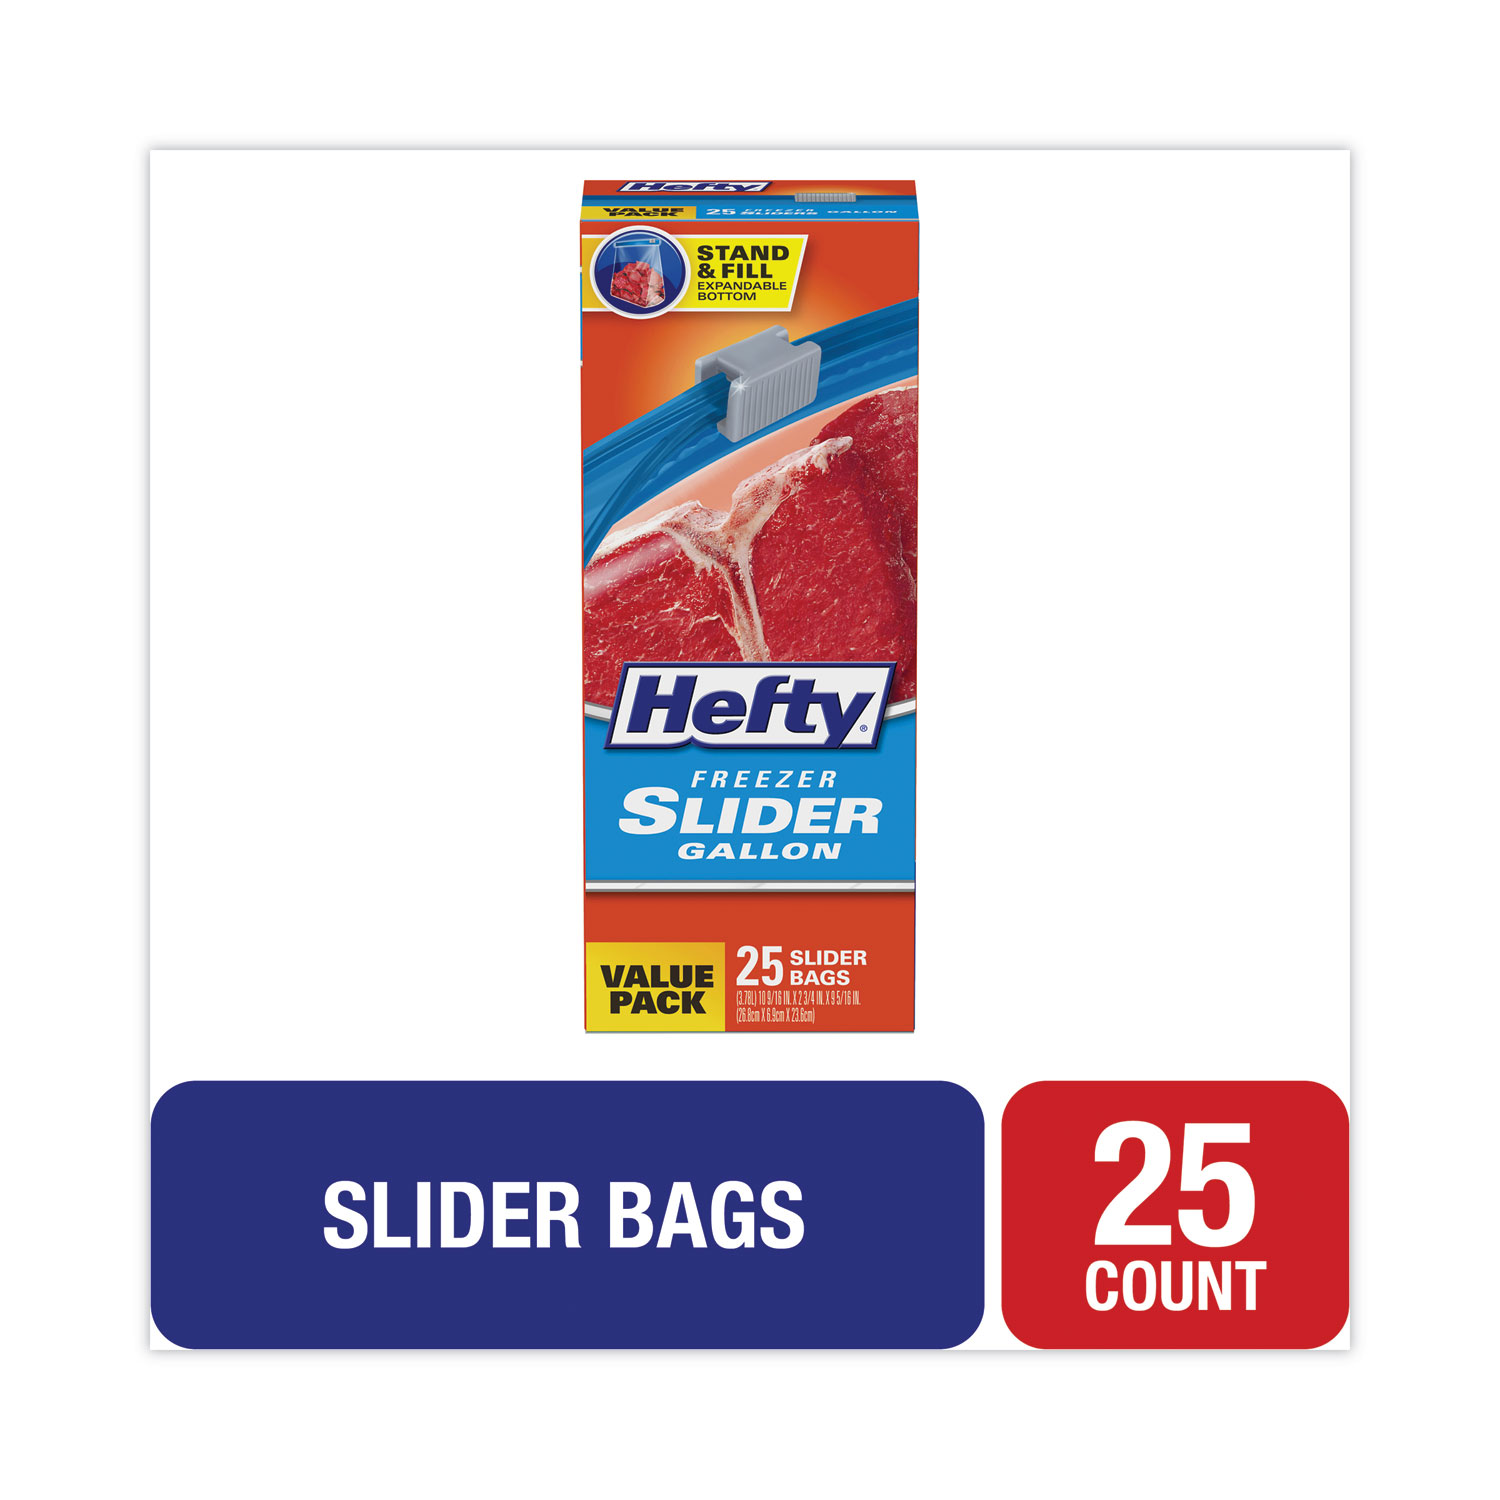 Hefty Jumbo / 2.5 Gallon Slider Storage Bags